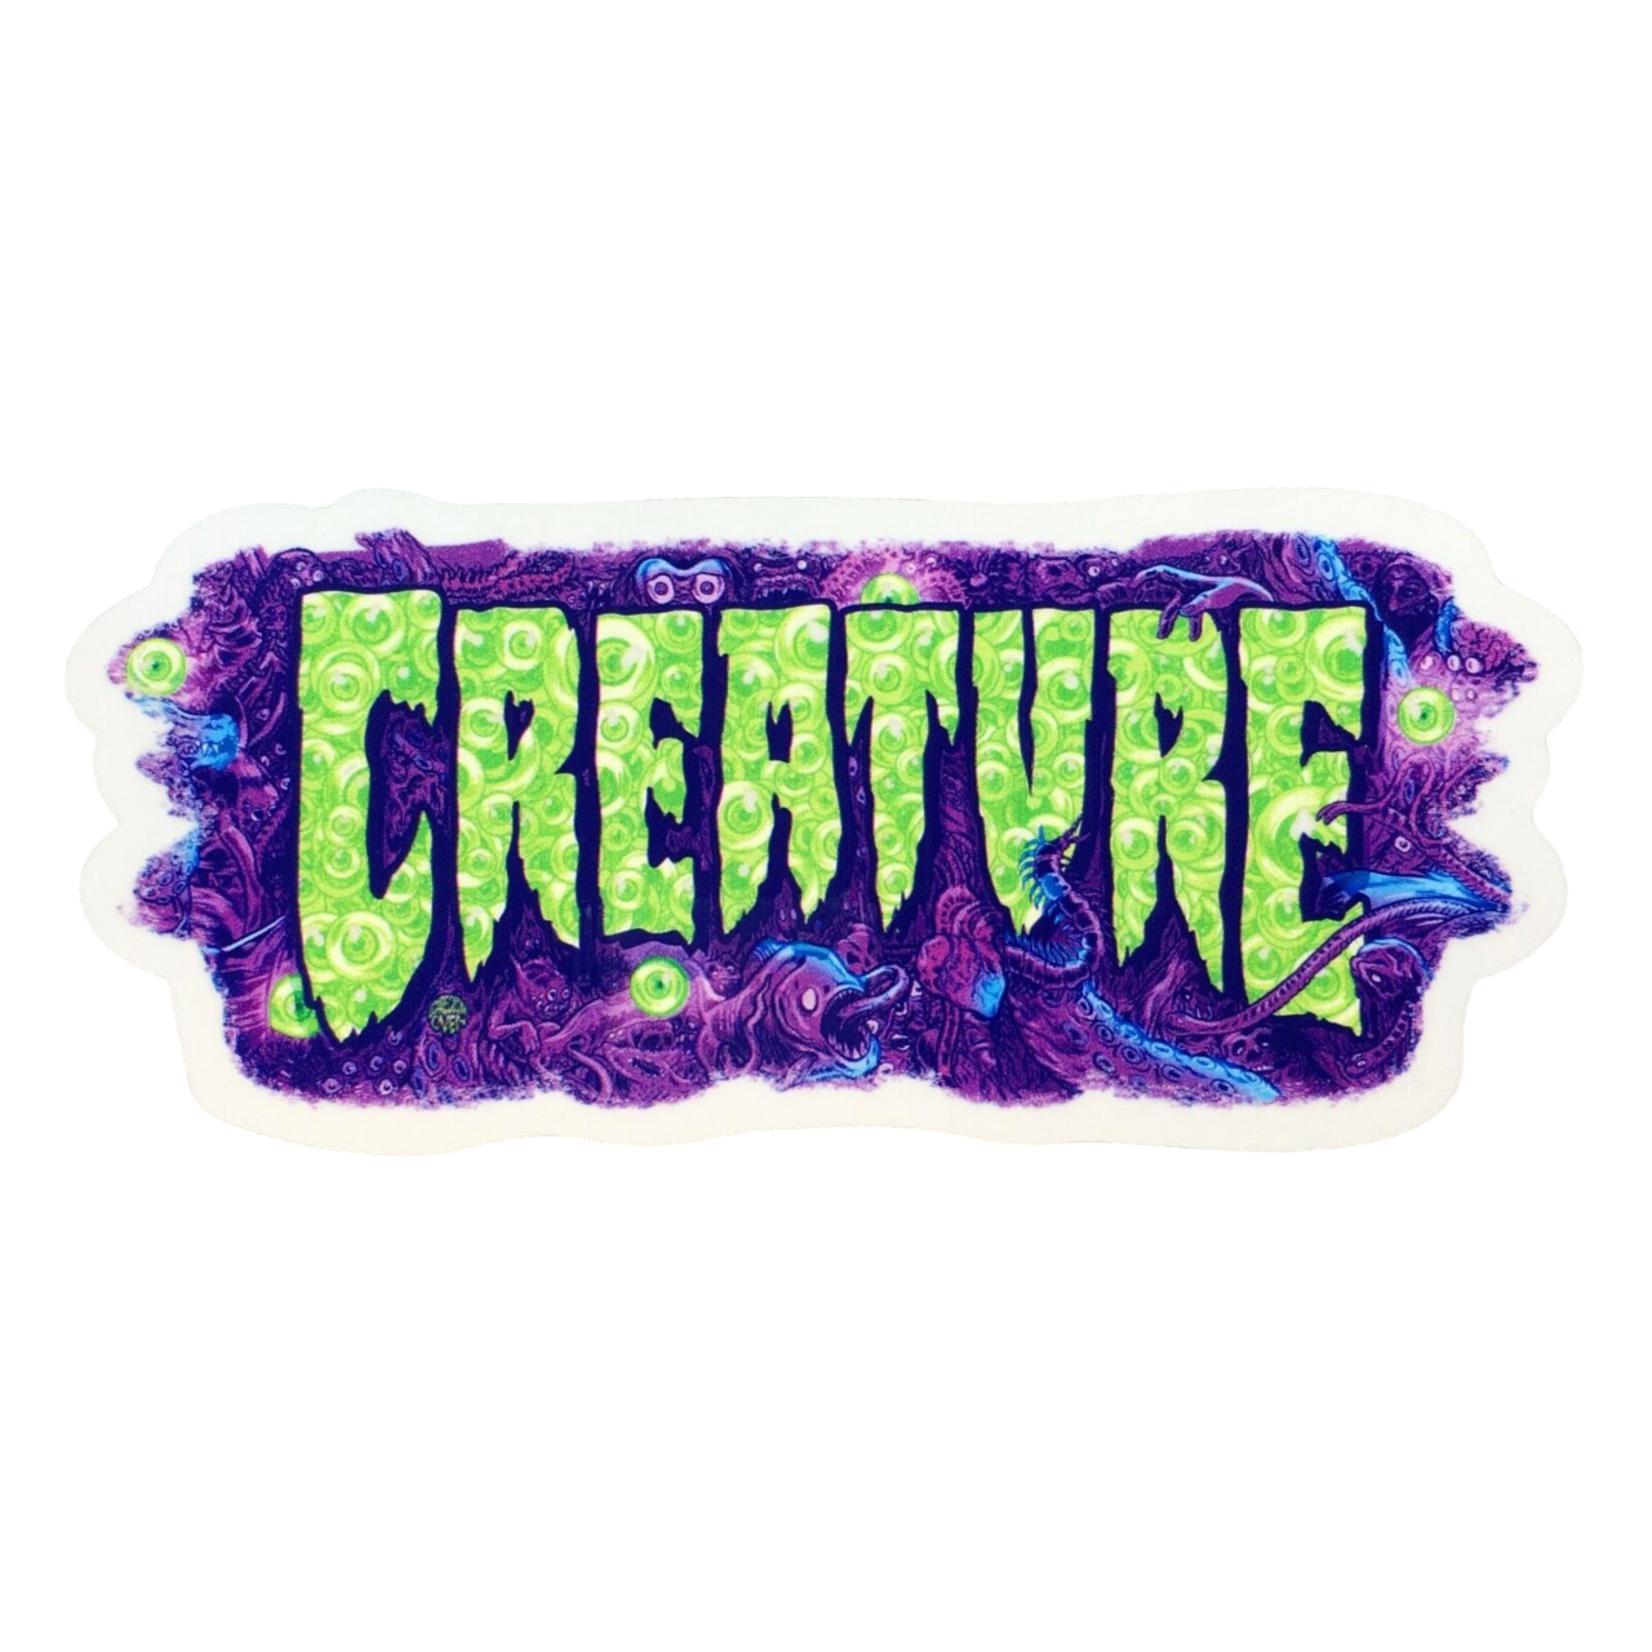 Creature Creature Detox Decal Clear Vinyl Sticker - 7" x 3" (Vintage)